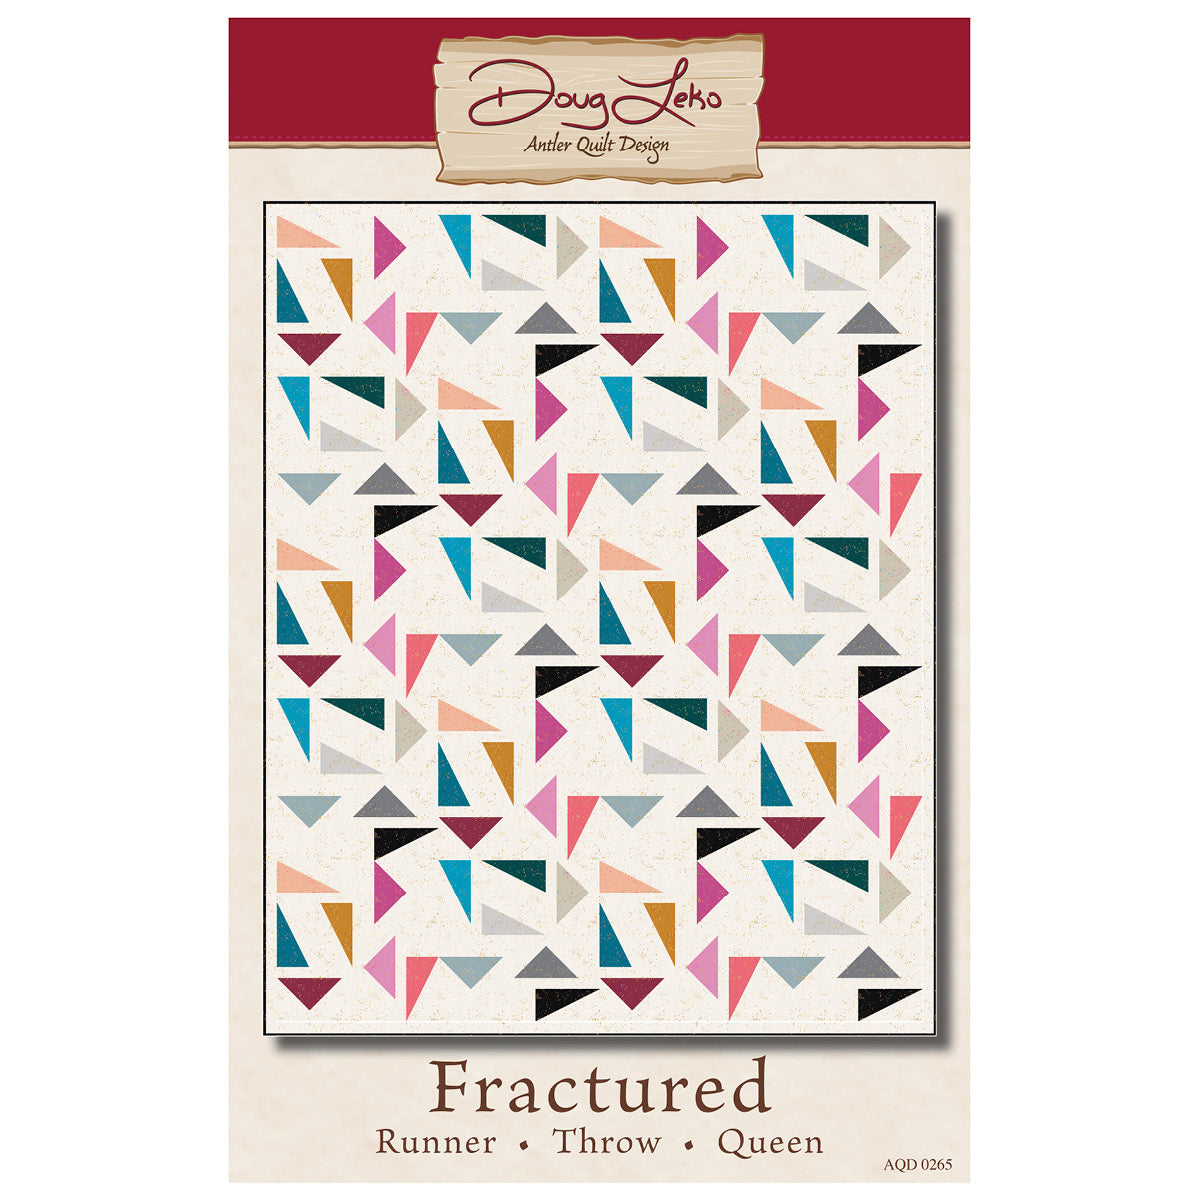 Fractured Antler Quilt Design Llc